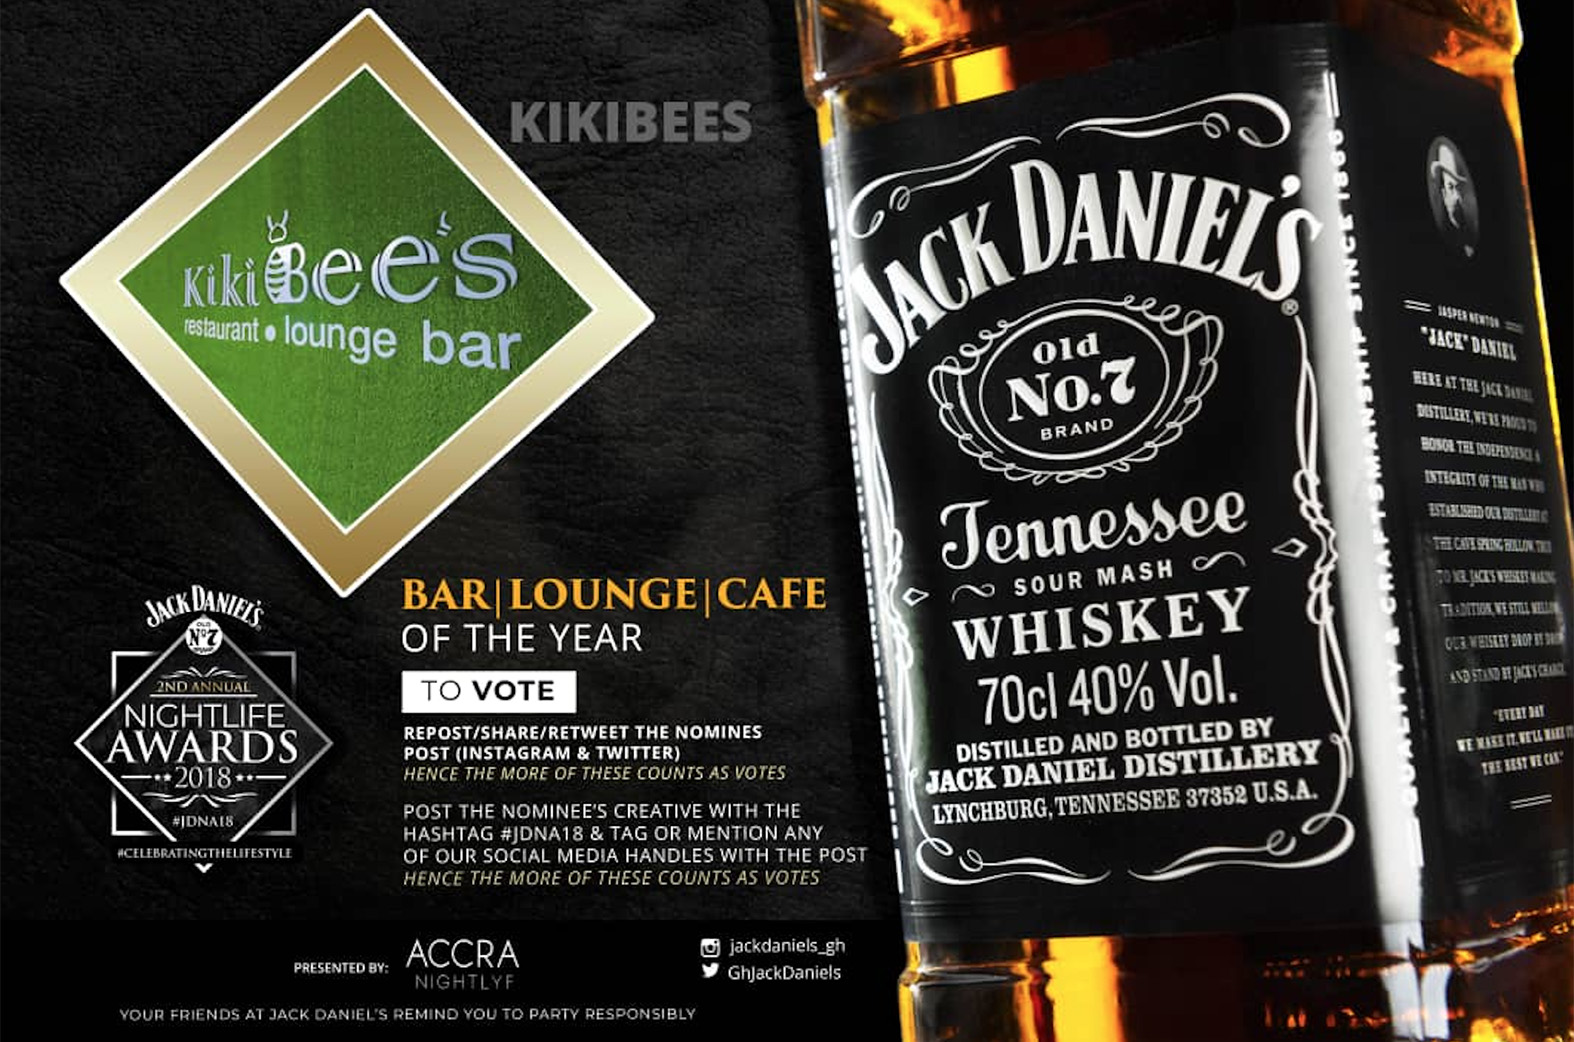 Kikibees Karaoke gets Jack Daniel’s Night Life Awards nominations